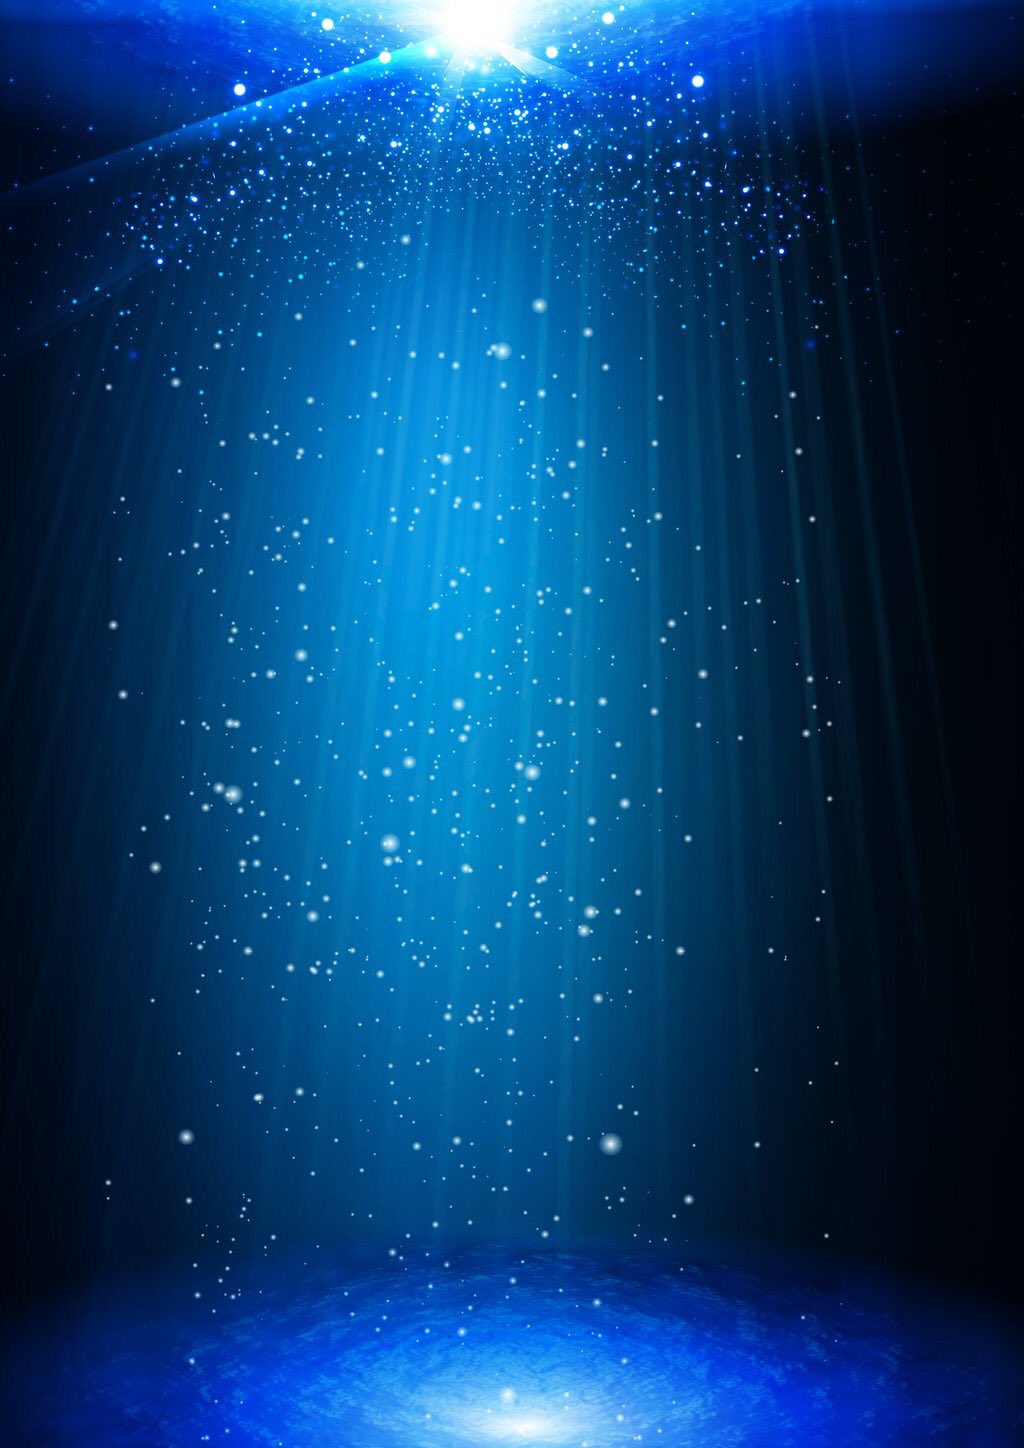 Starwalker Studio 夏コミ土曜b11b Di Twitter 著作権フリー素材集 新刊 海と水中の素材集 海 の中に差し込む光や水面 深海の素材 レイヤー分解可能psd付き 260種類 水面の輝き 泡 魚も取り外せます スパコミ1日目 プ15 ２日目 ａ13